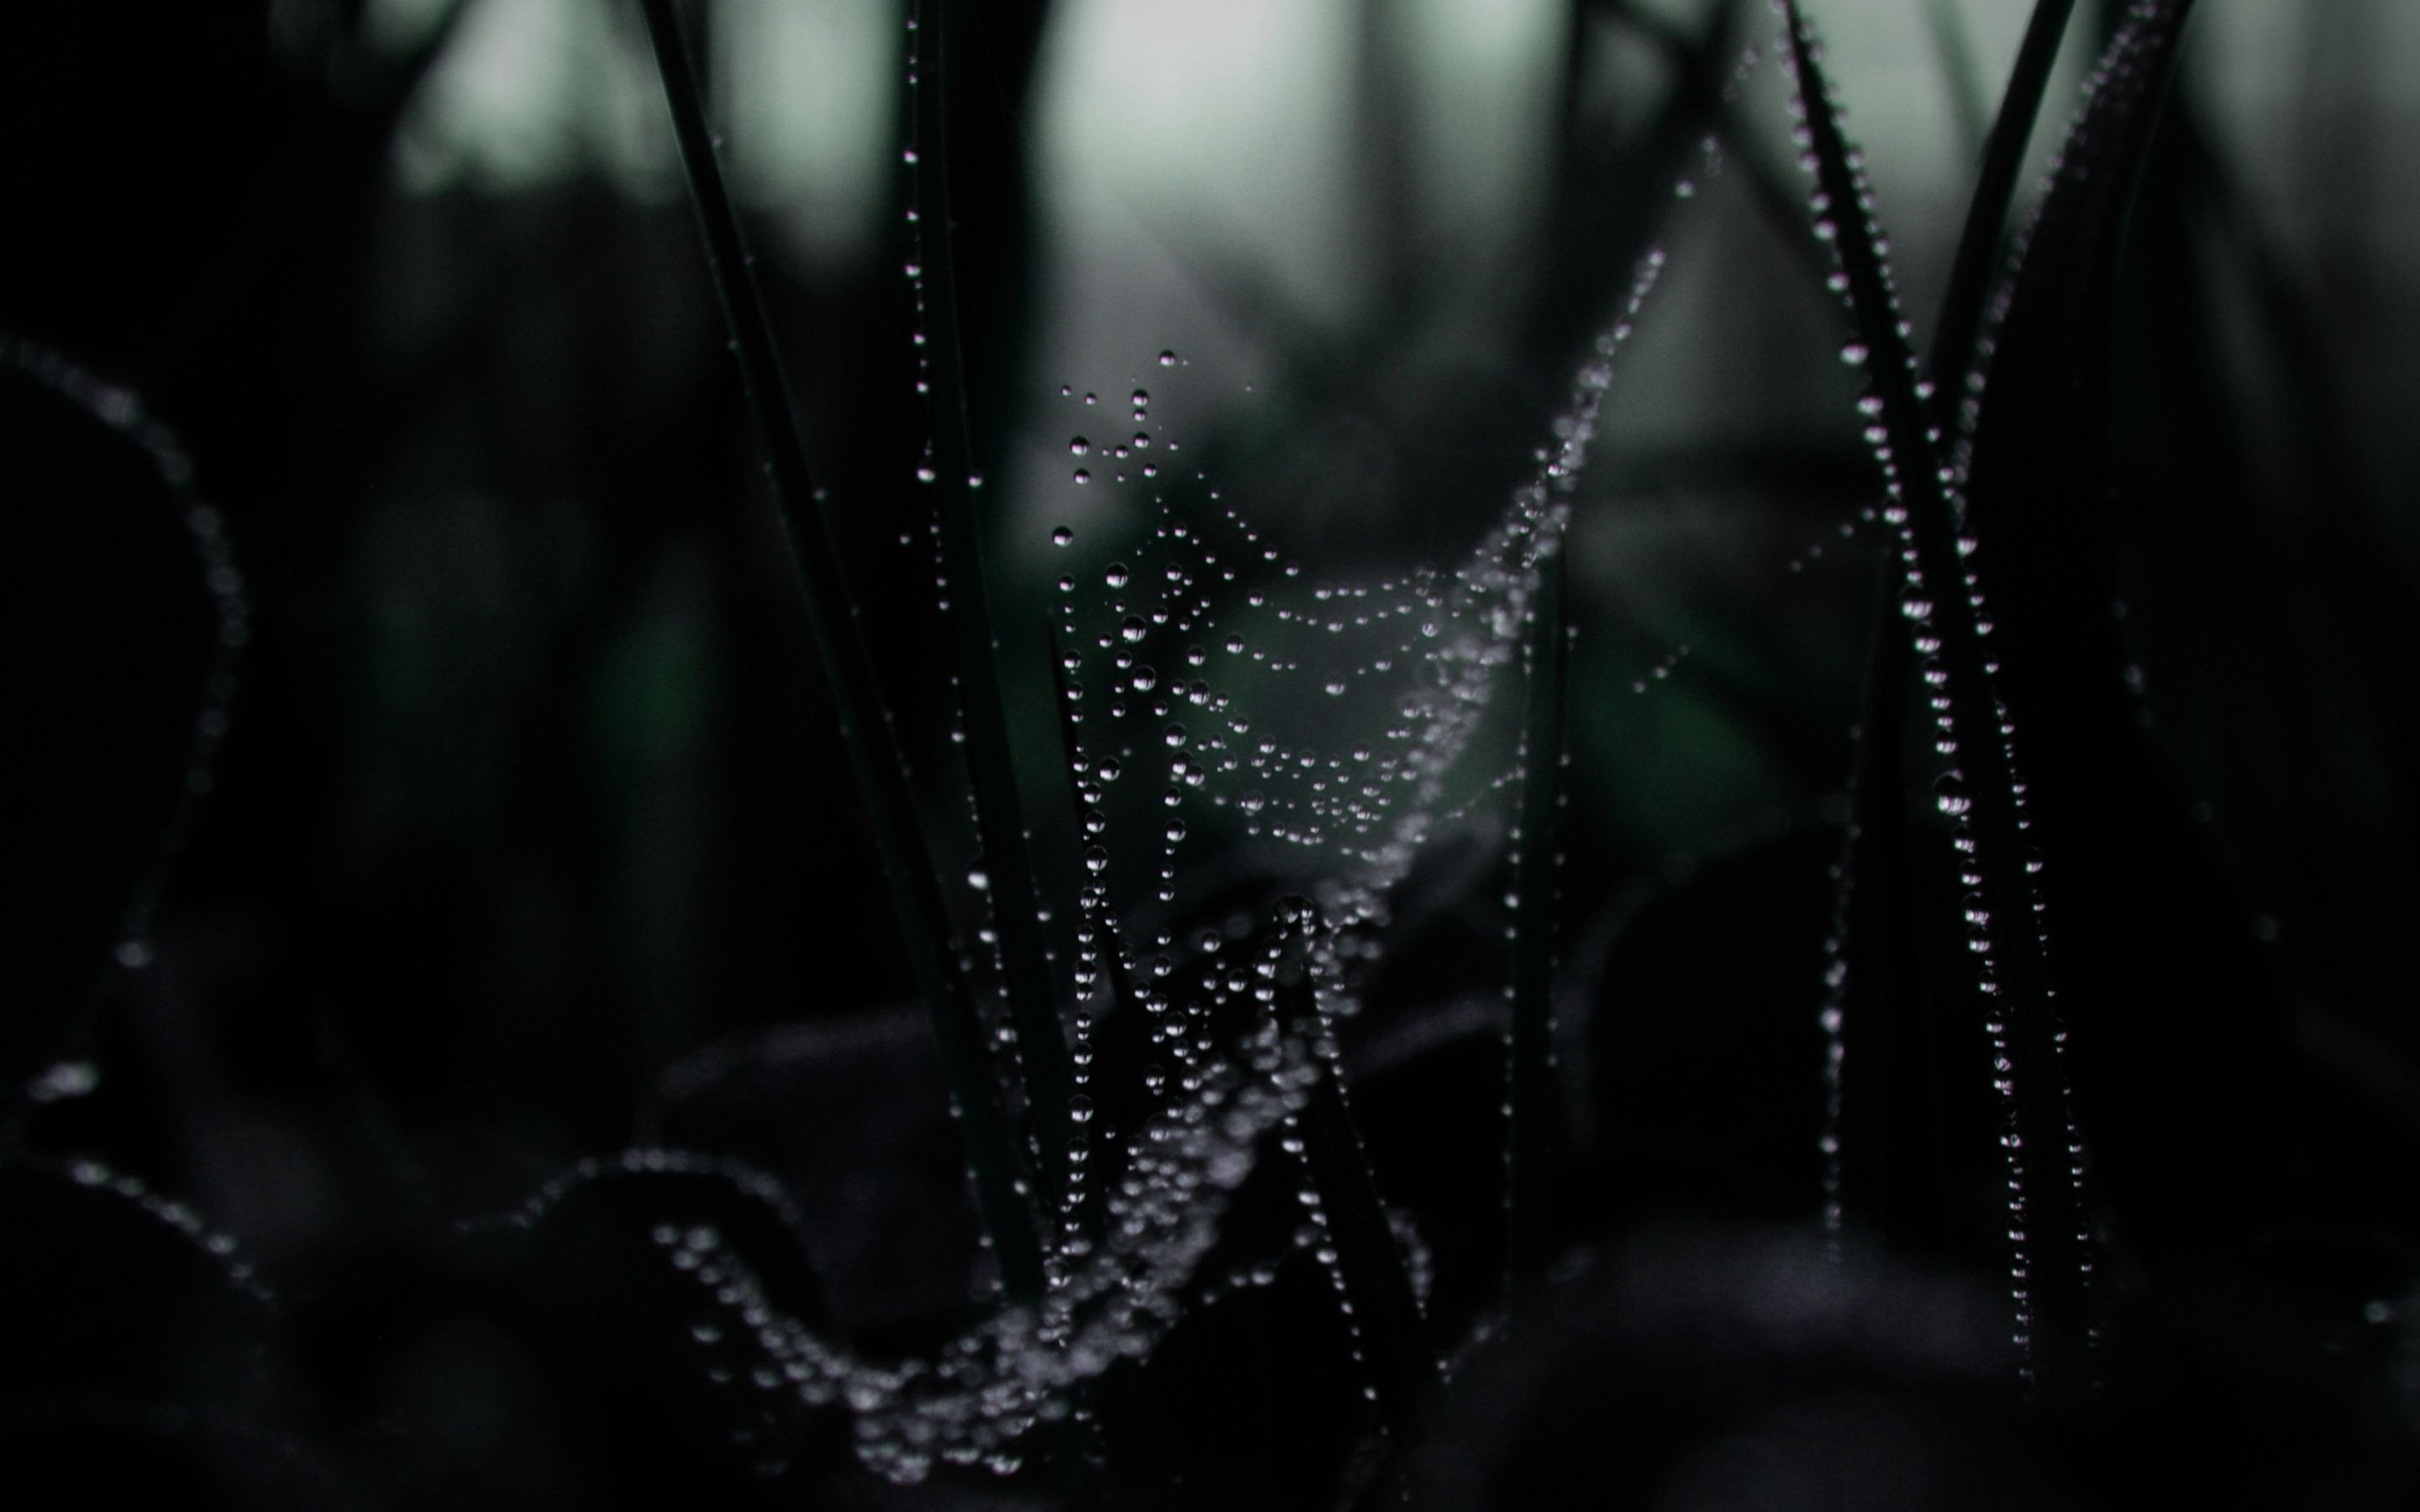 Dew On Spider web Macro Mac Wallpaper Download | Free Mac ...